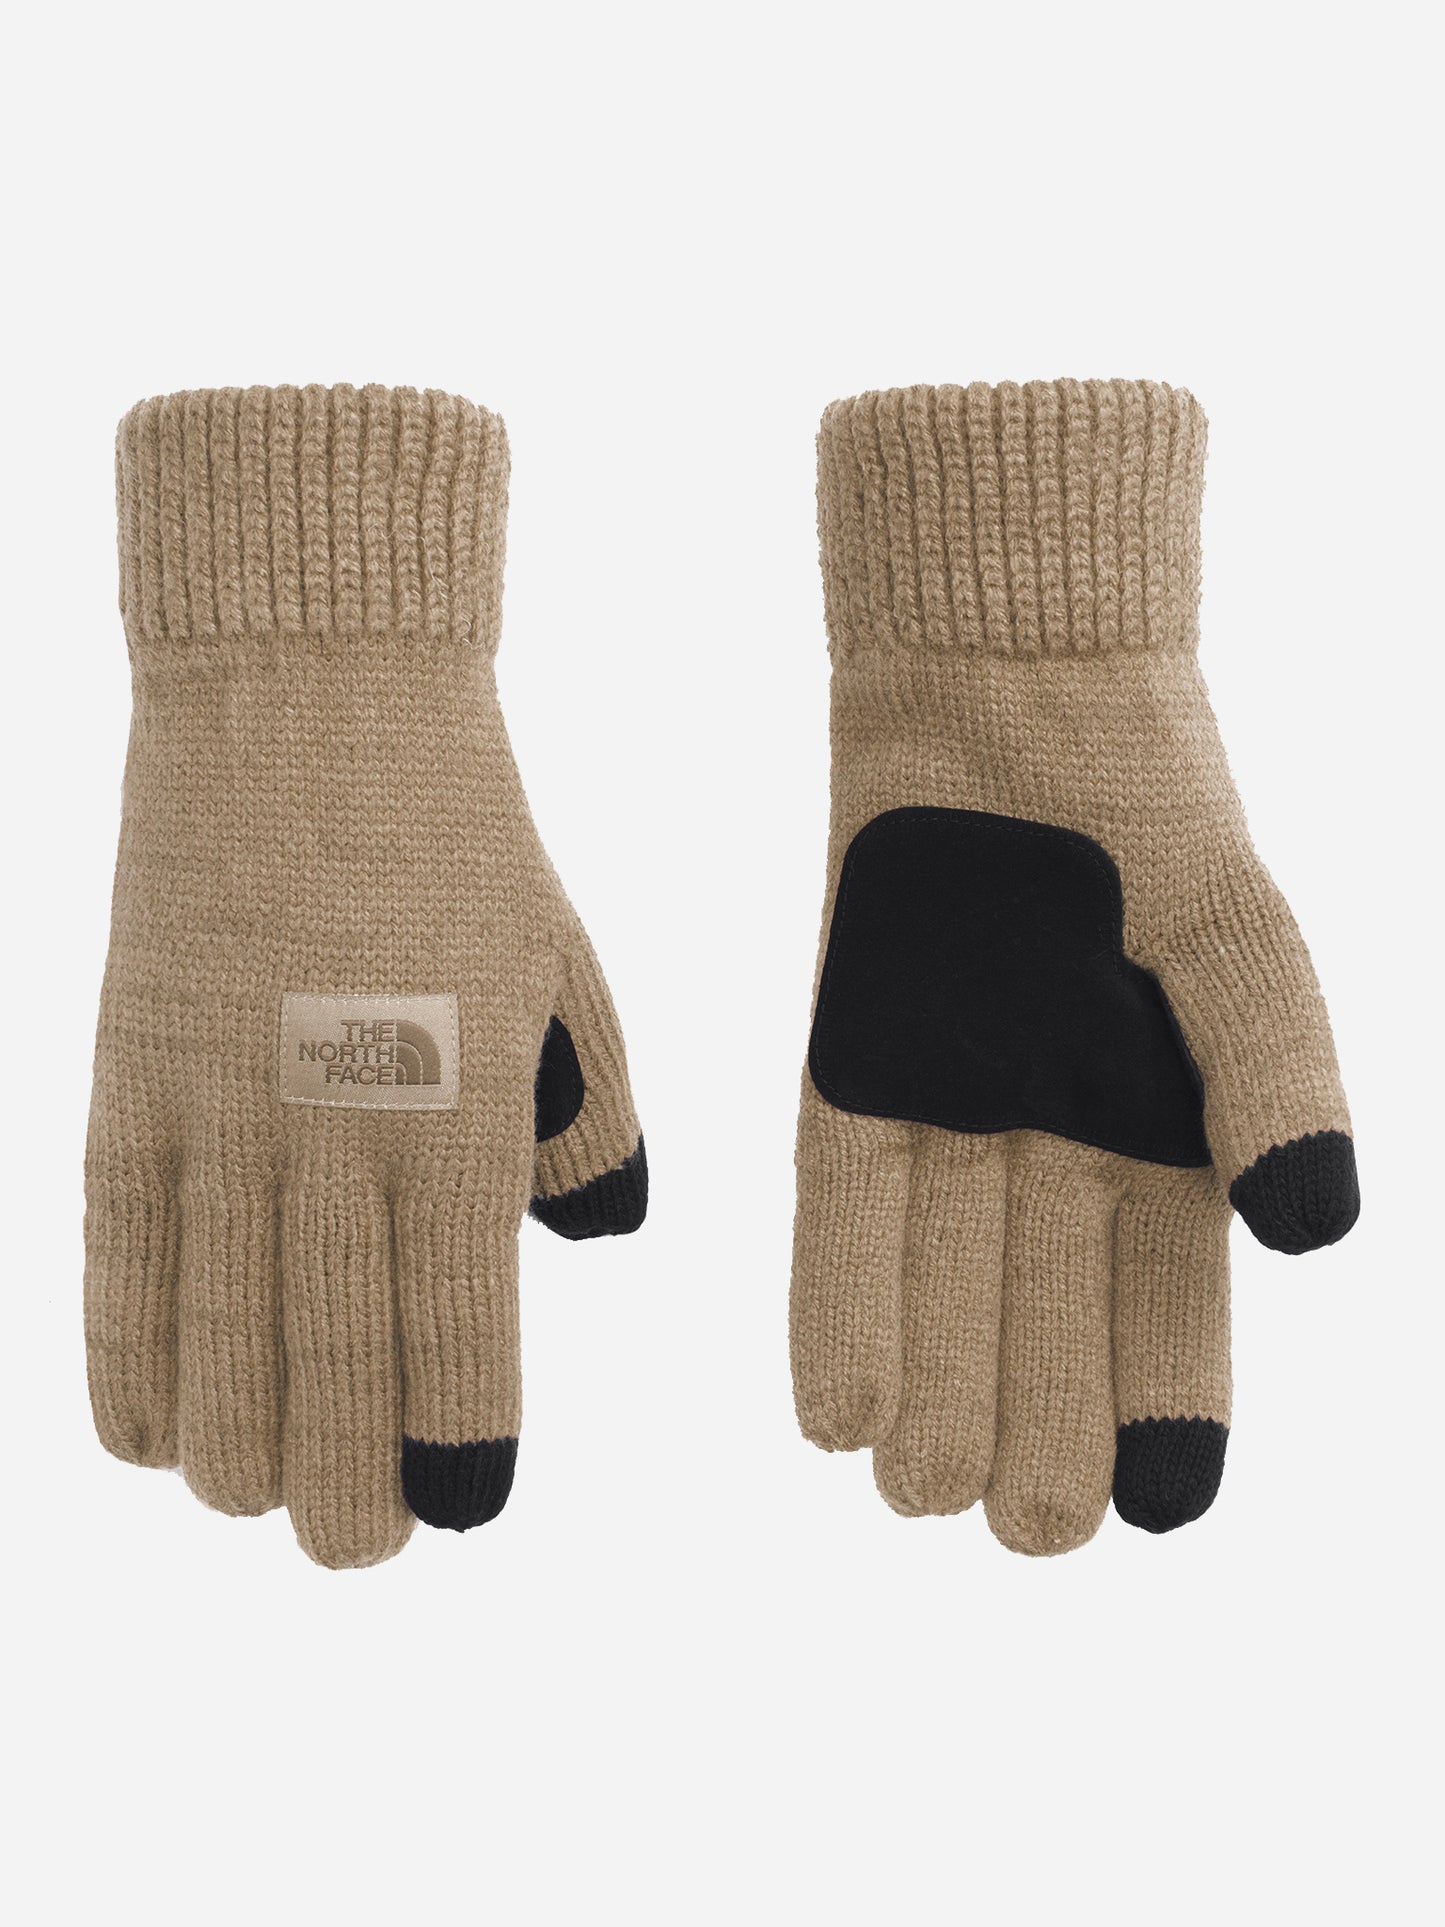 The North Face Men's Salty Dog E-Tip Gloves